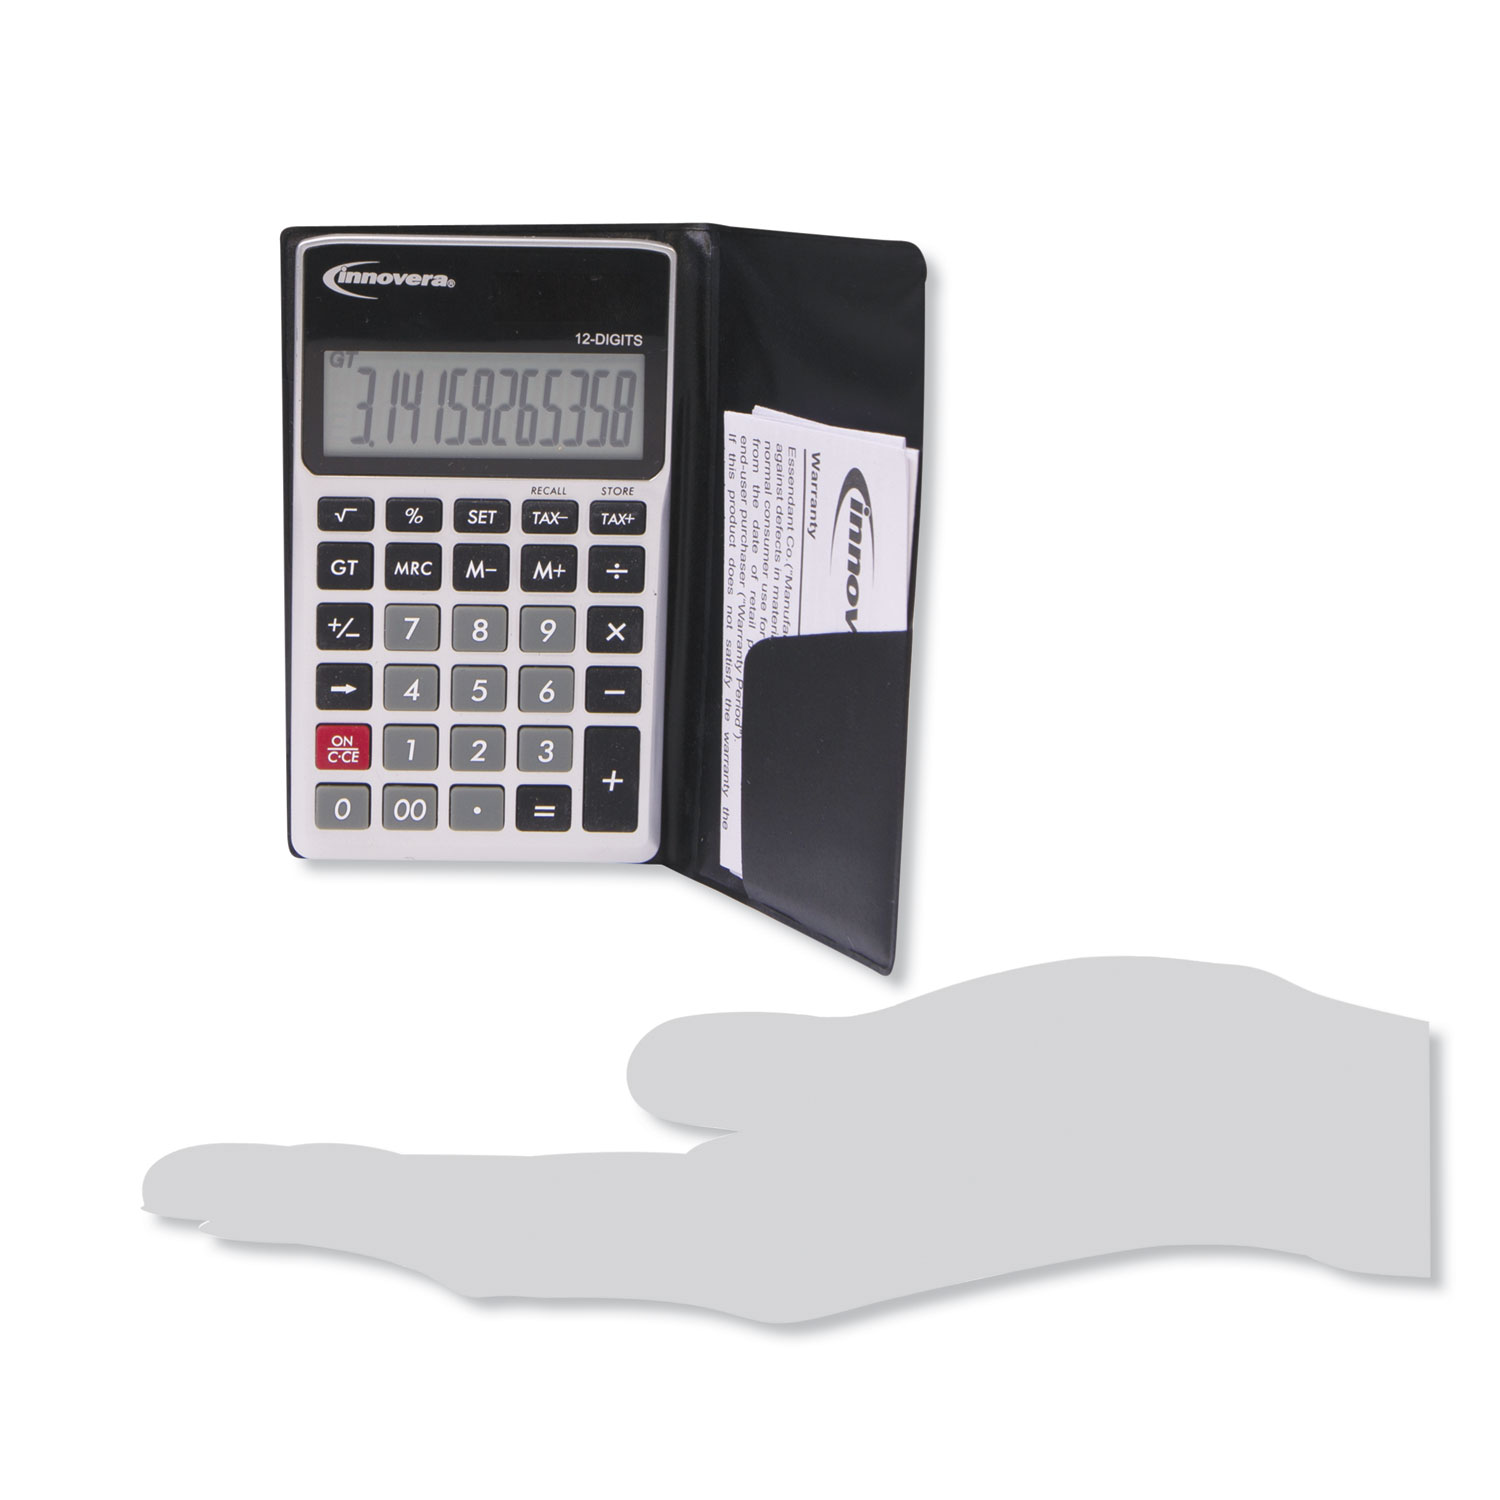 15922 Pocket Calculator, Dual Power, 12-Digit LCD Display